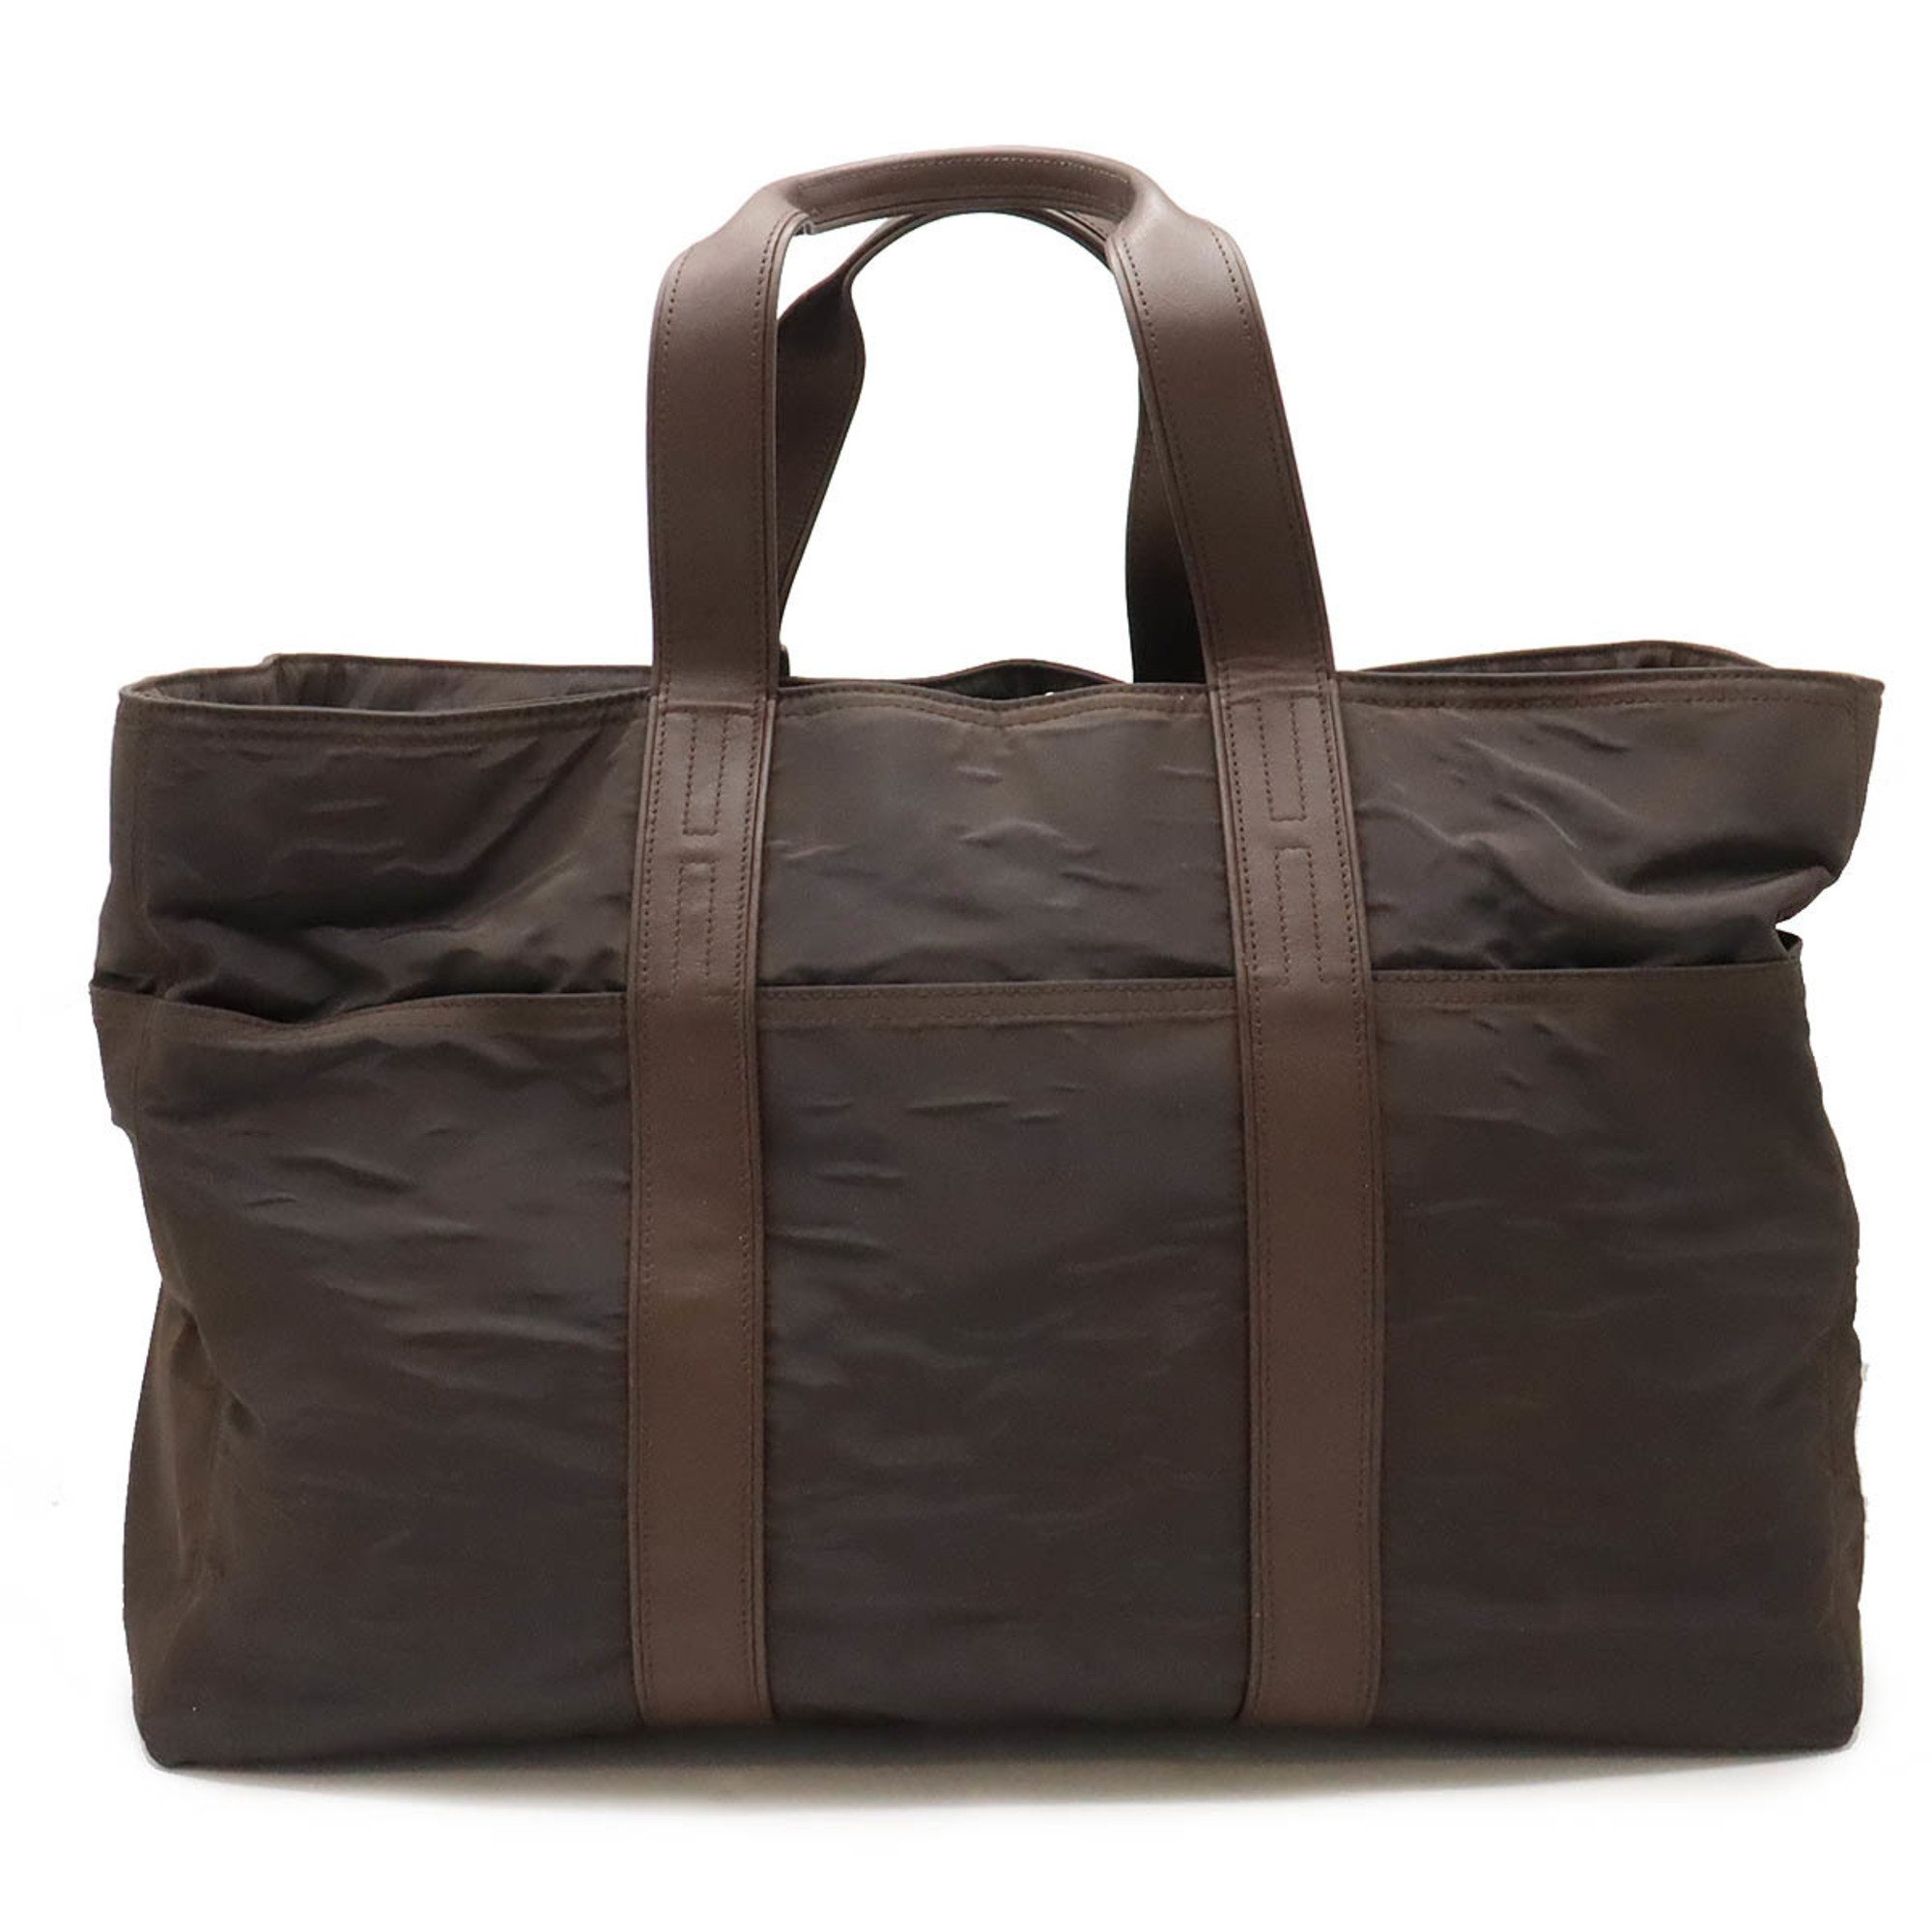 HERMES Acapulco GM Boston bag, travel tote large tote, nylon, leather, dark brown